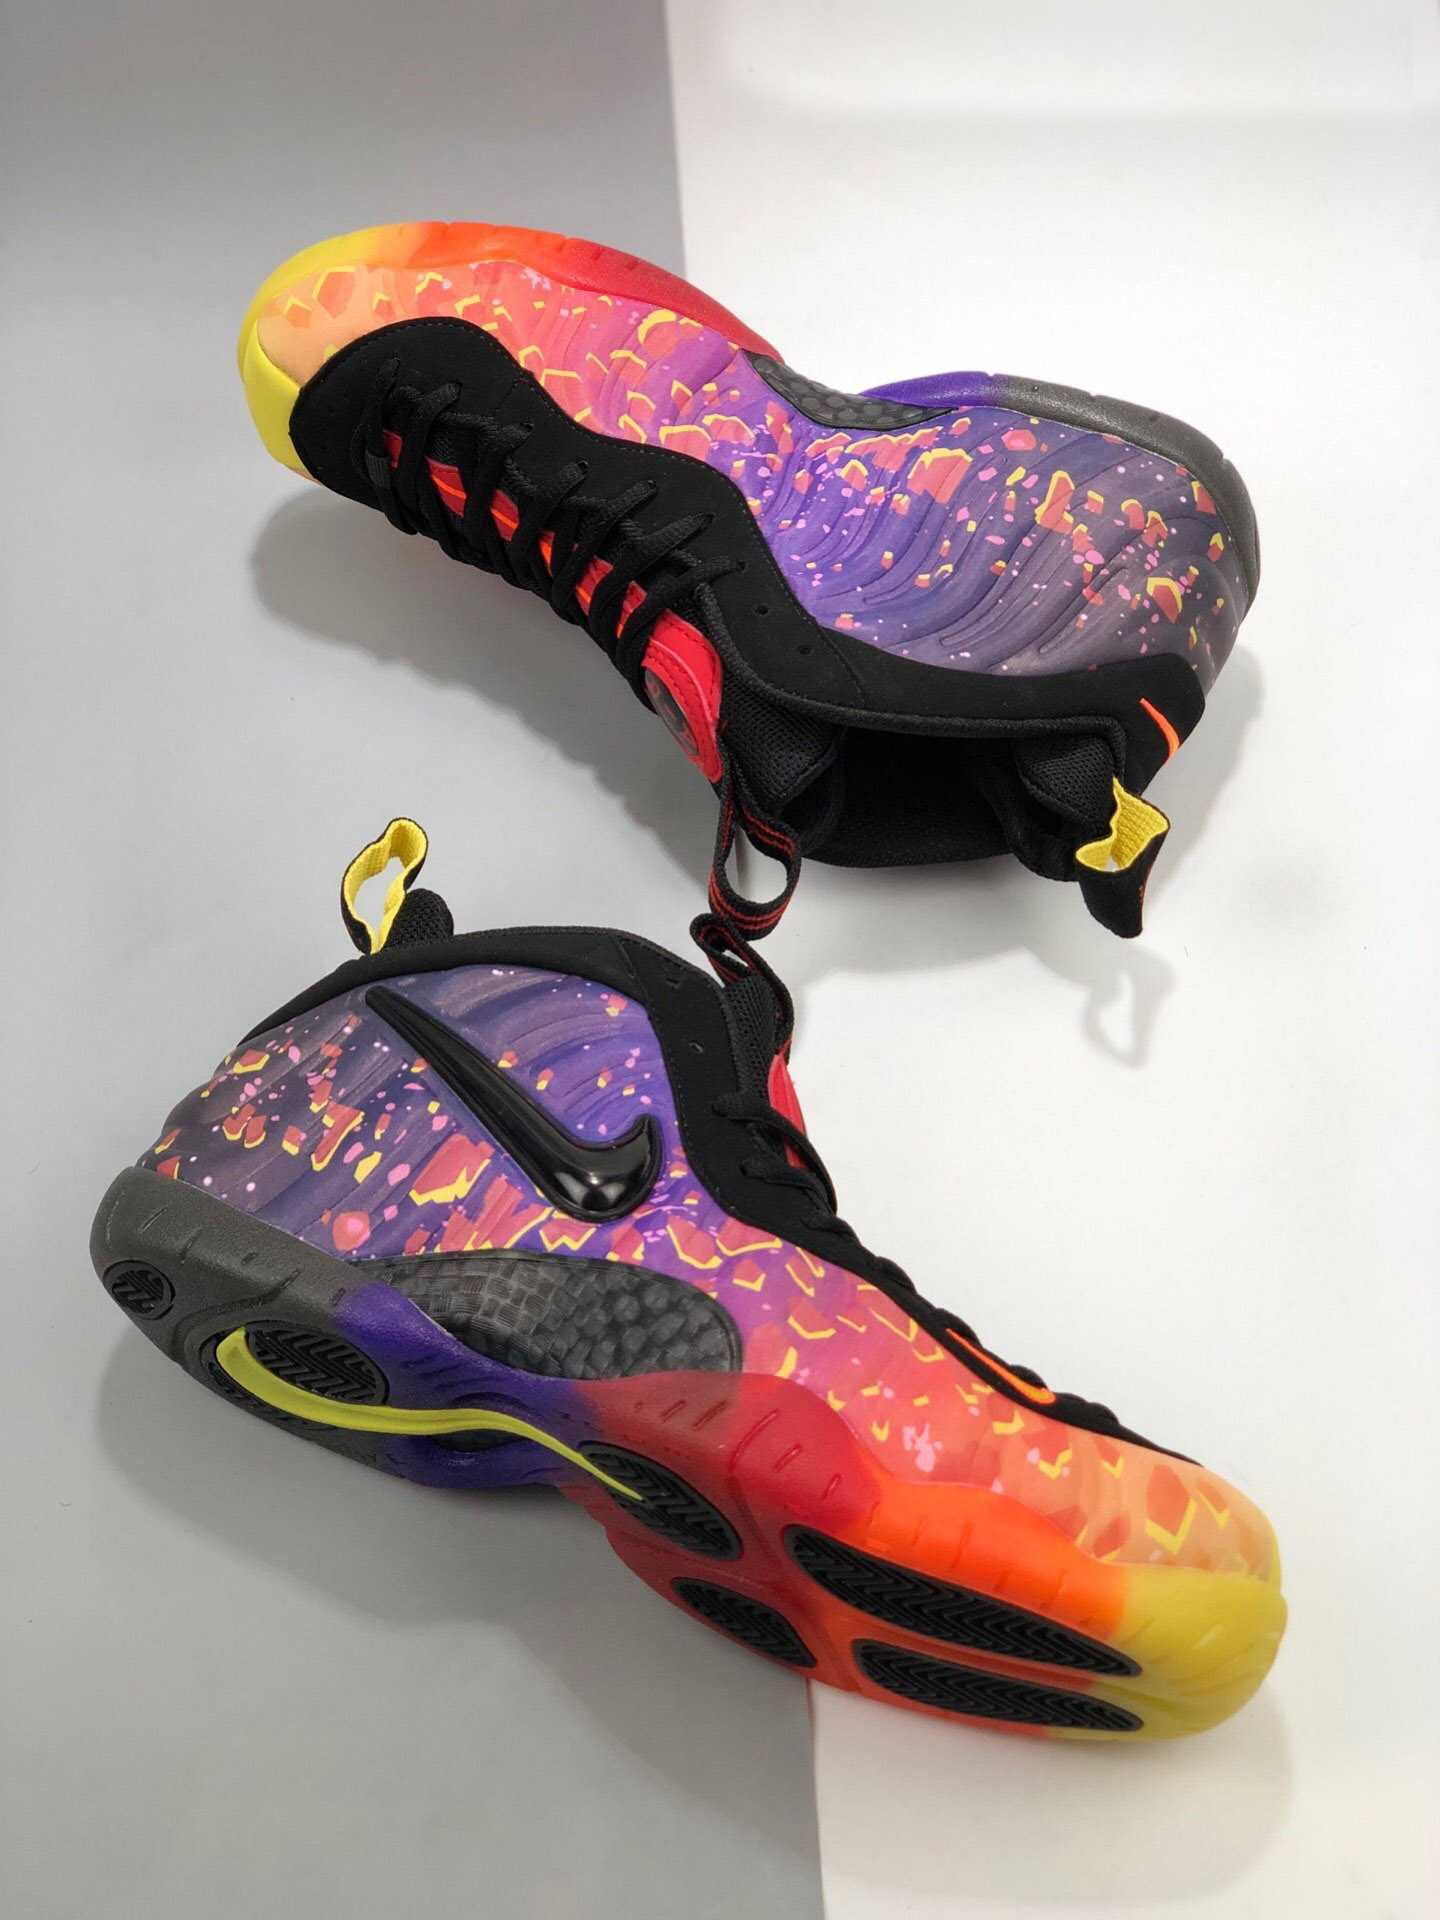 Nike Air Foamposite Pro Area 72 Asteroid 616750-600 For Sale – Sneaker Hello